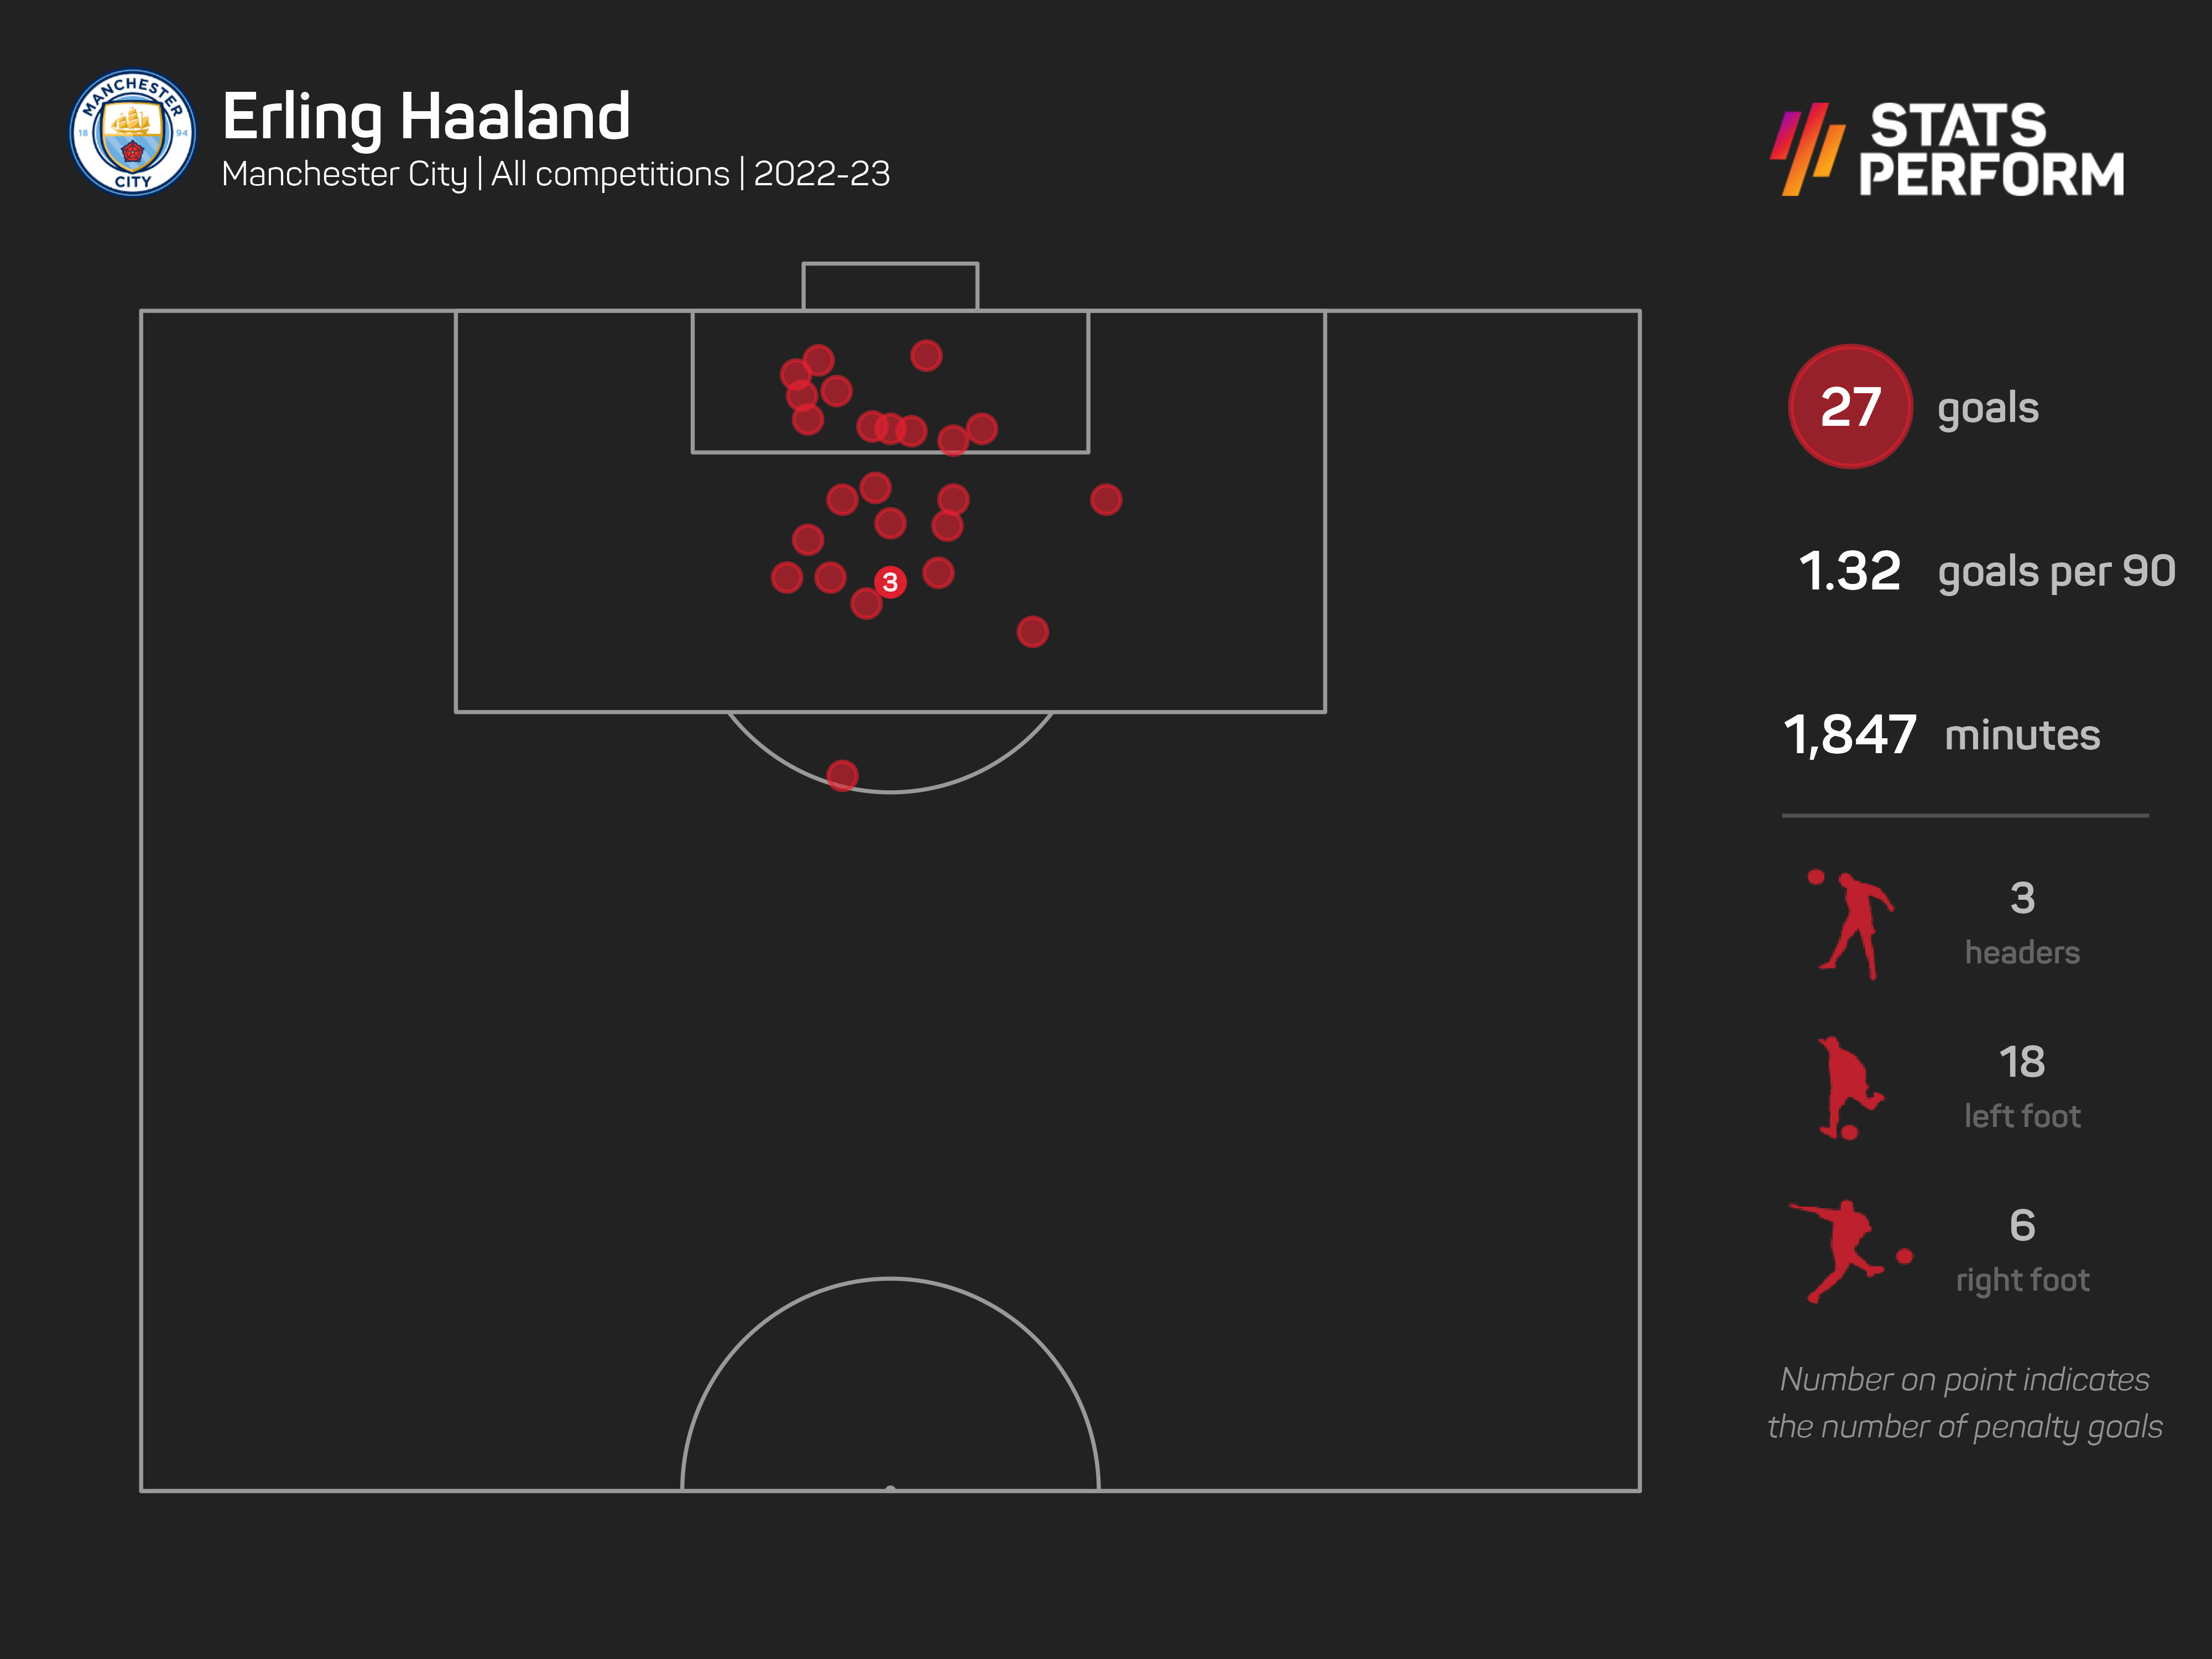 Erling Haaland has 27 goals this season